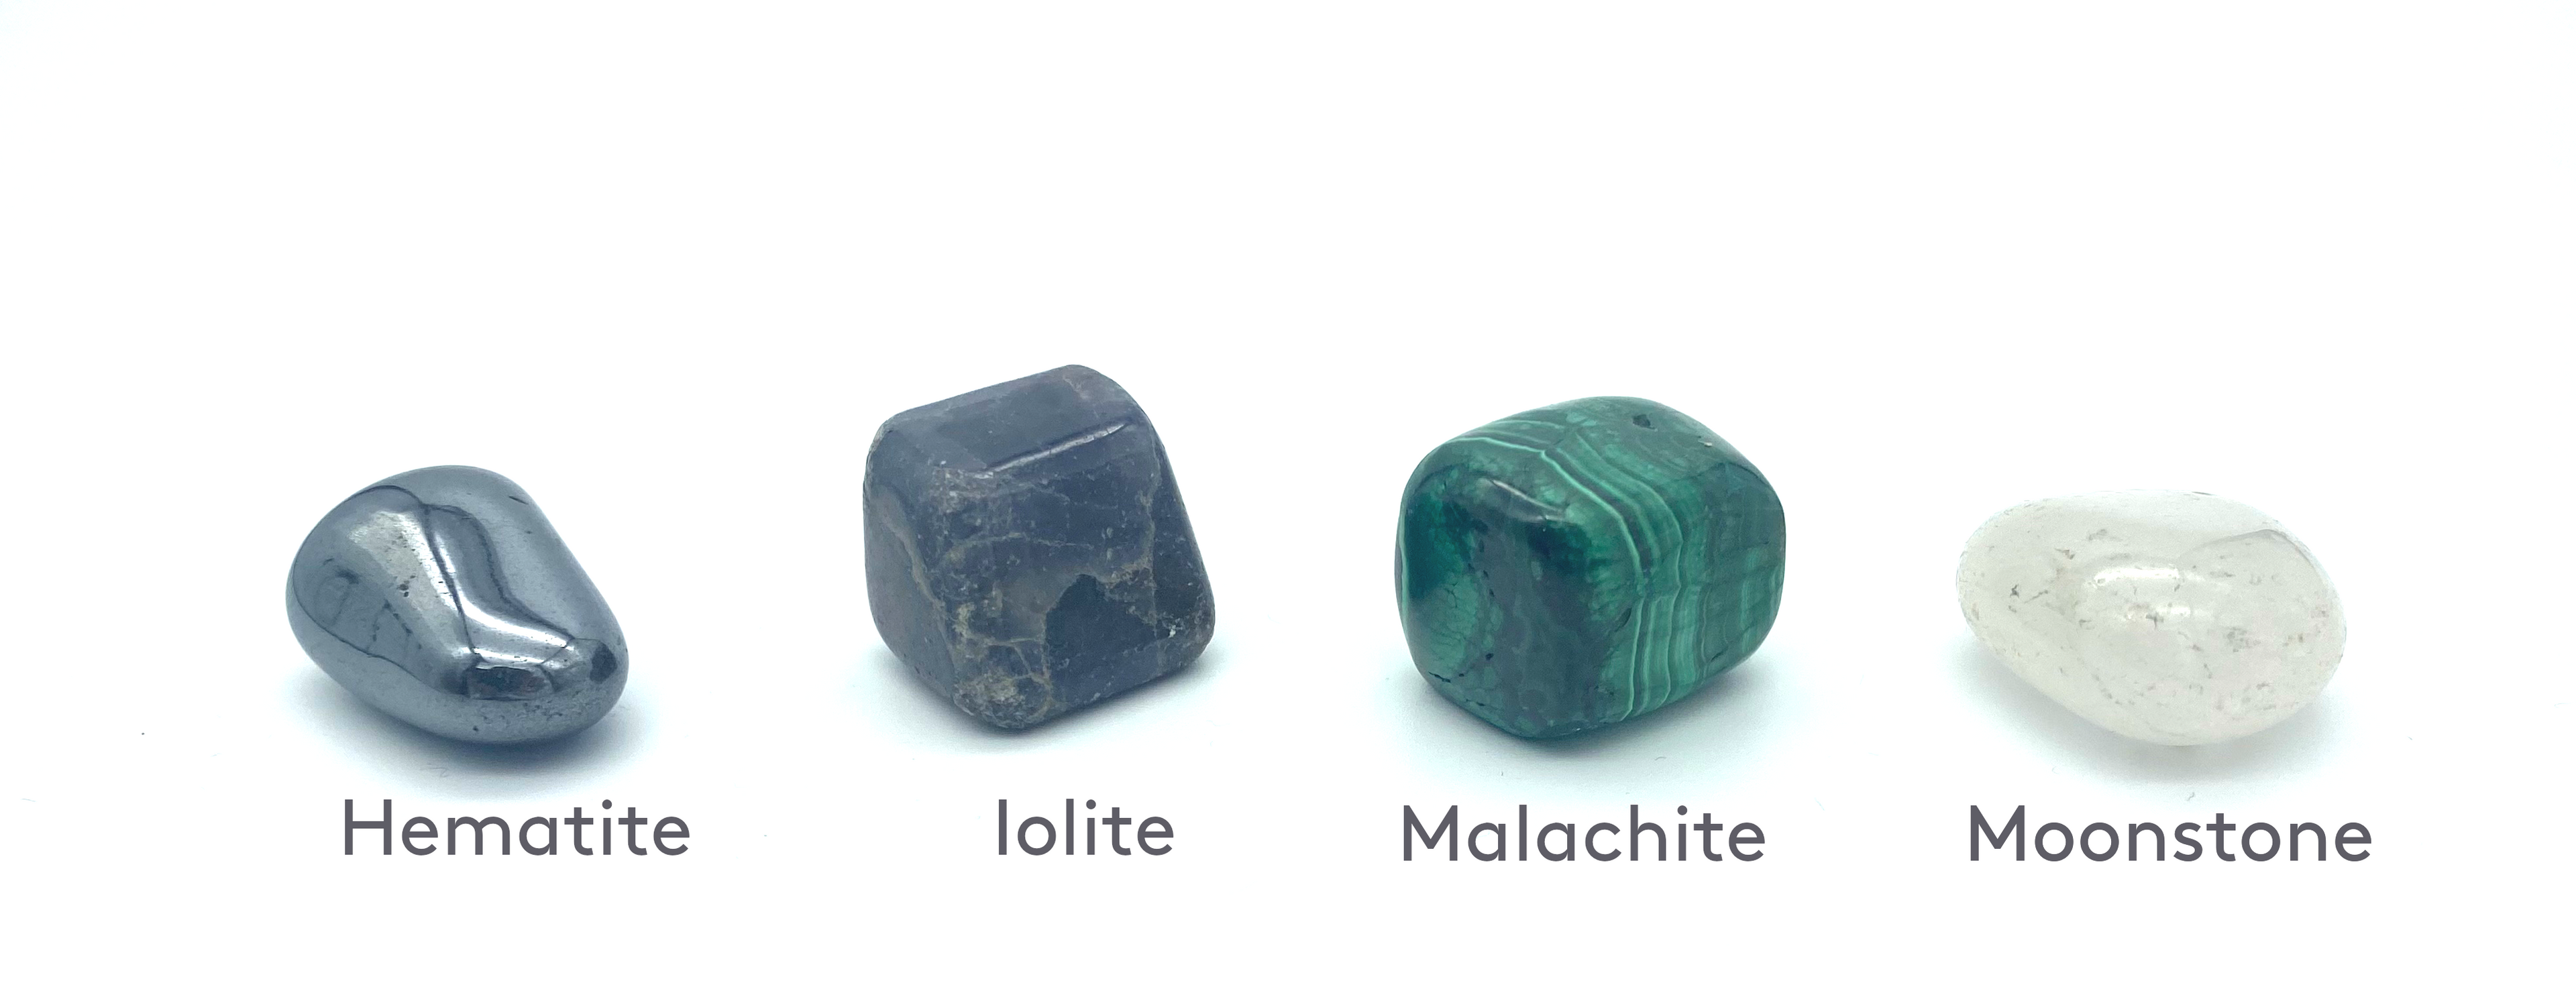 Hematite Iolite Malachite Moonstone